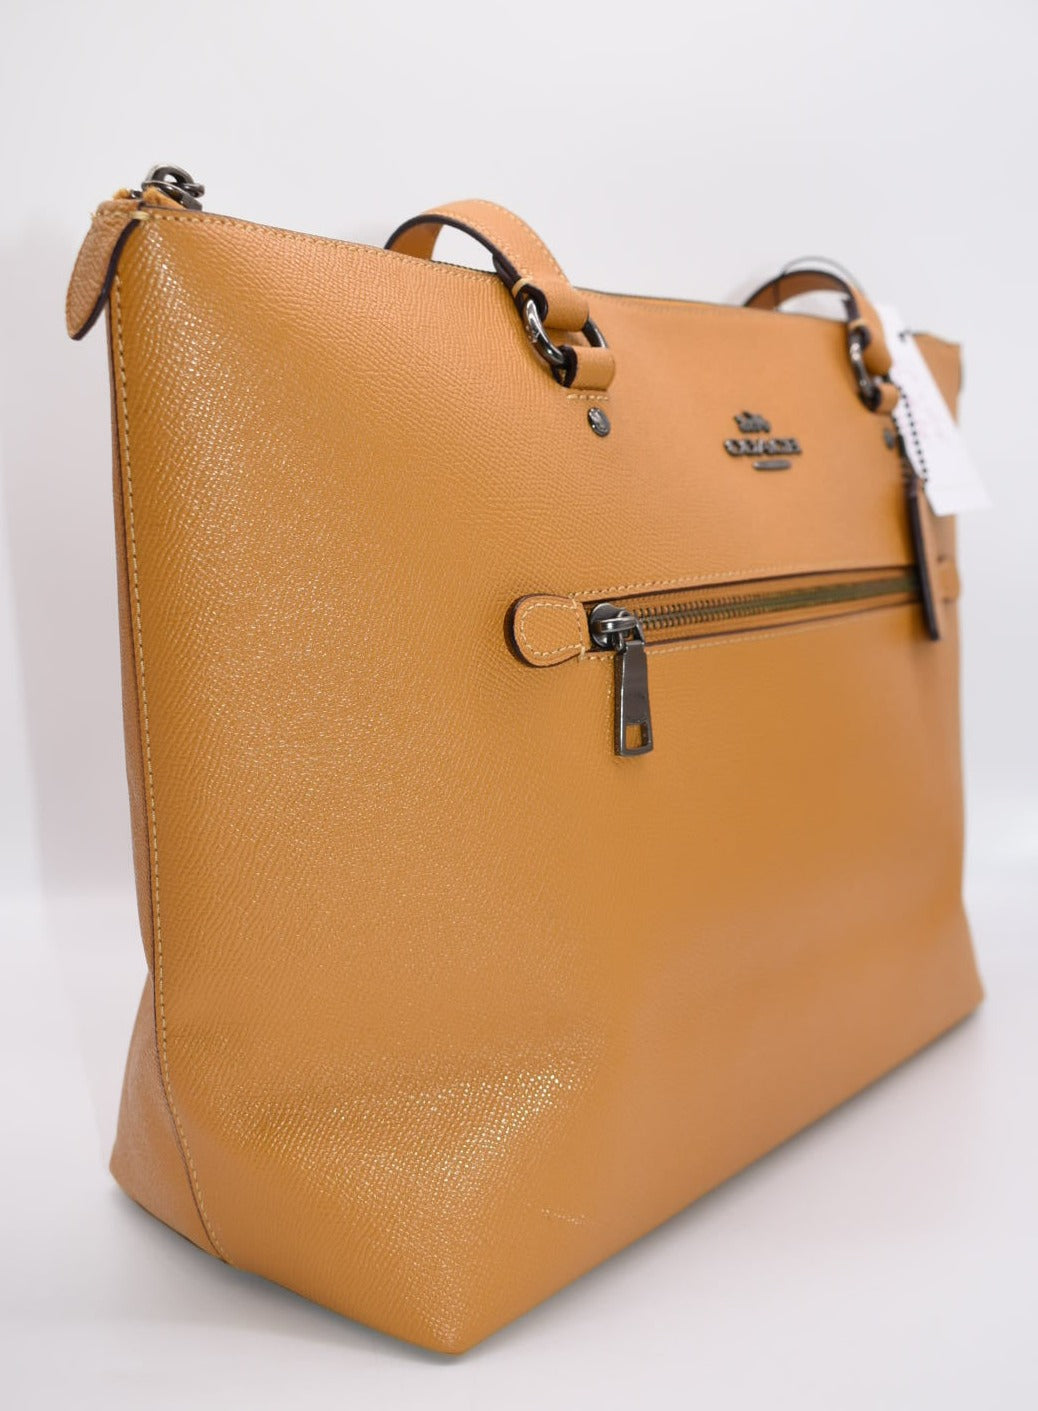 Coach Crossgrain Leather Gallery Tote Bag in Dark Yellow